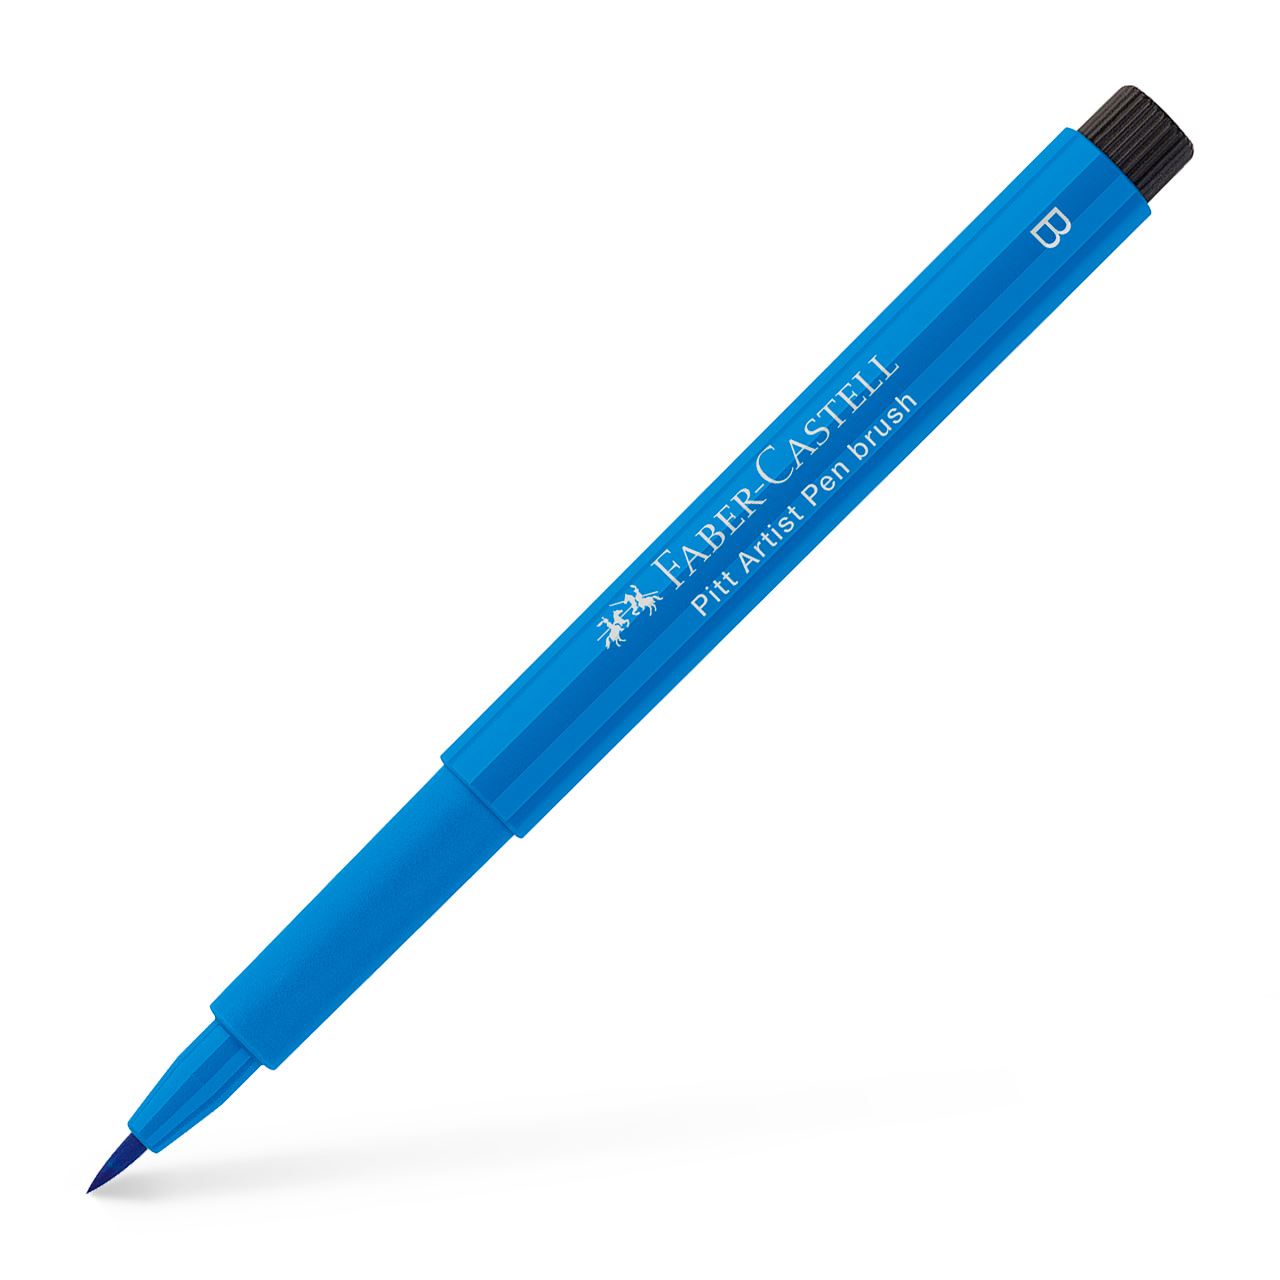 Faber-Castell - Penna Pitt Artist Pen blu ftalico